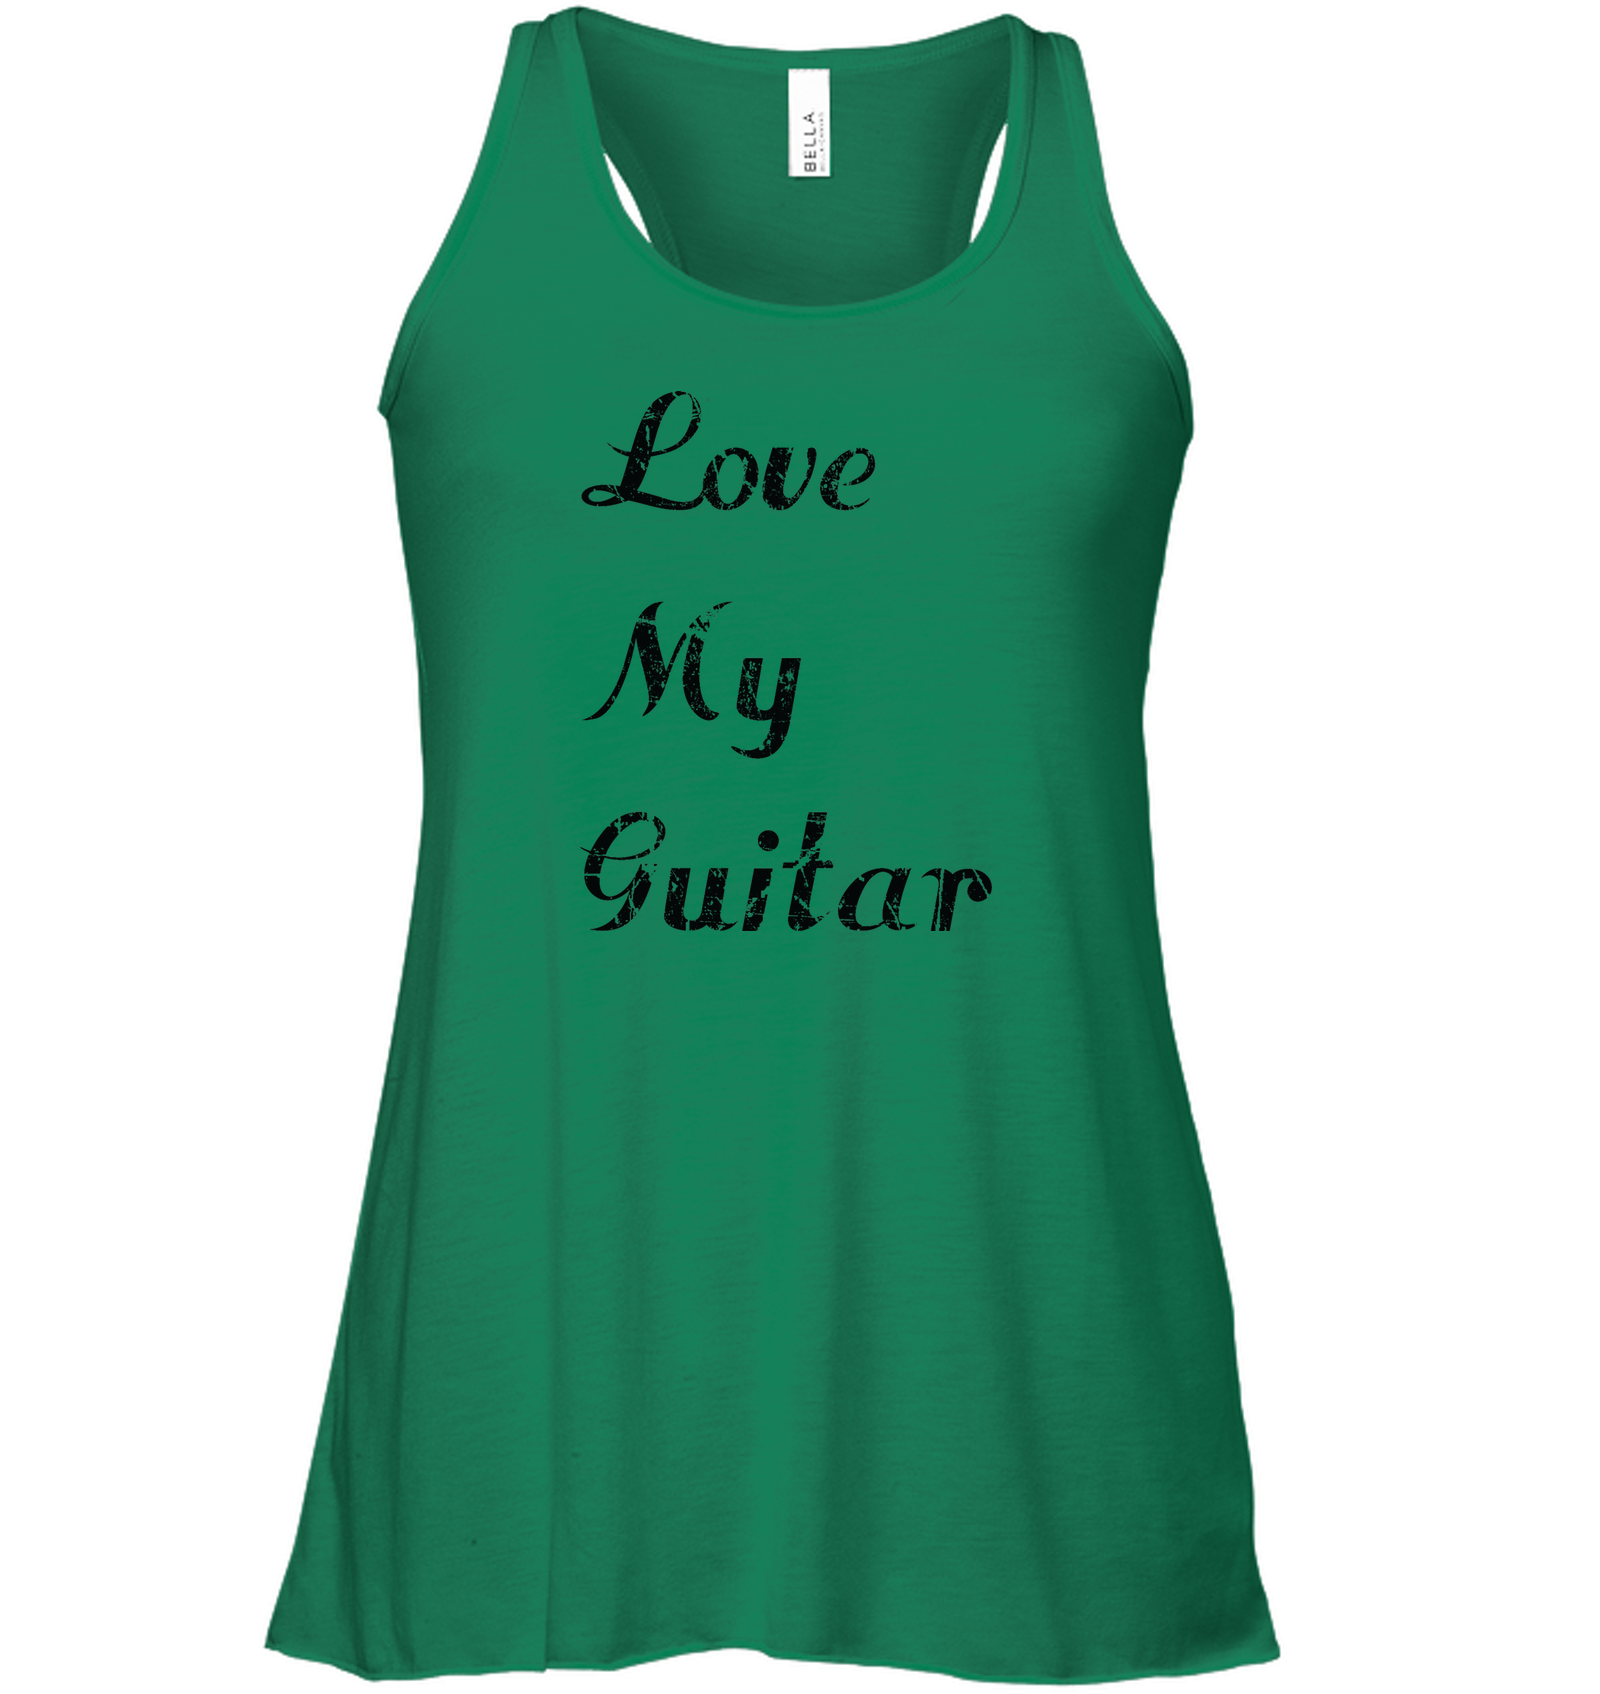 Love My Guitar simple and true - Bella + Canvas Women's Flowy Racerback Tank